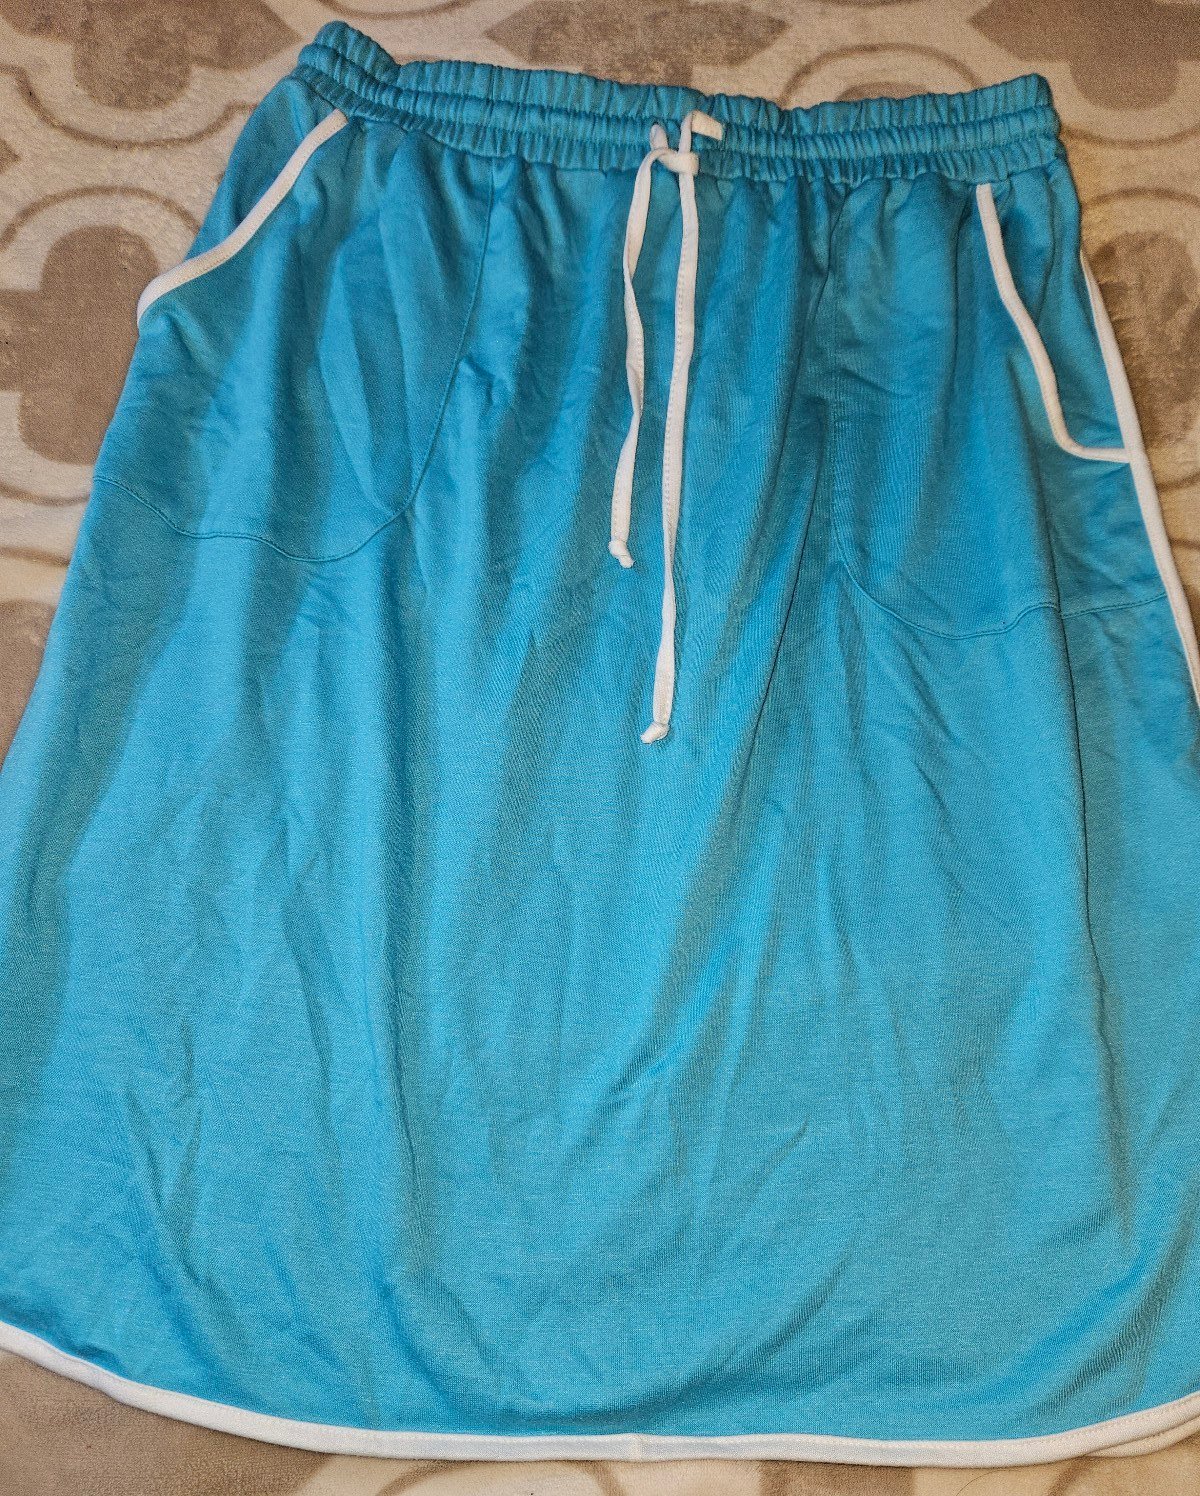 reasonable price Lularoe large lonicia blue skirt ijNxV